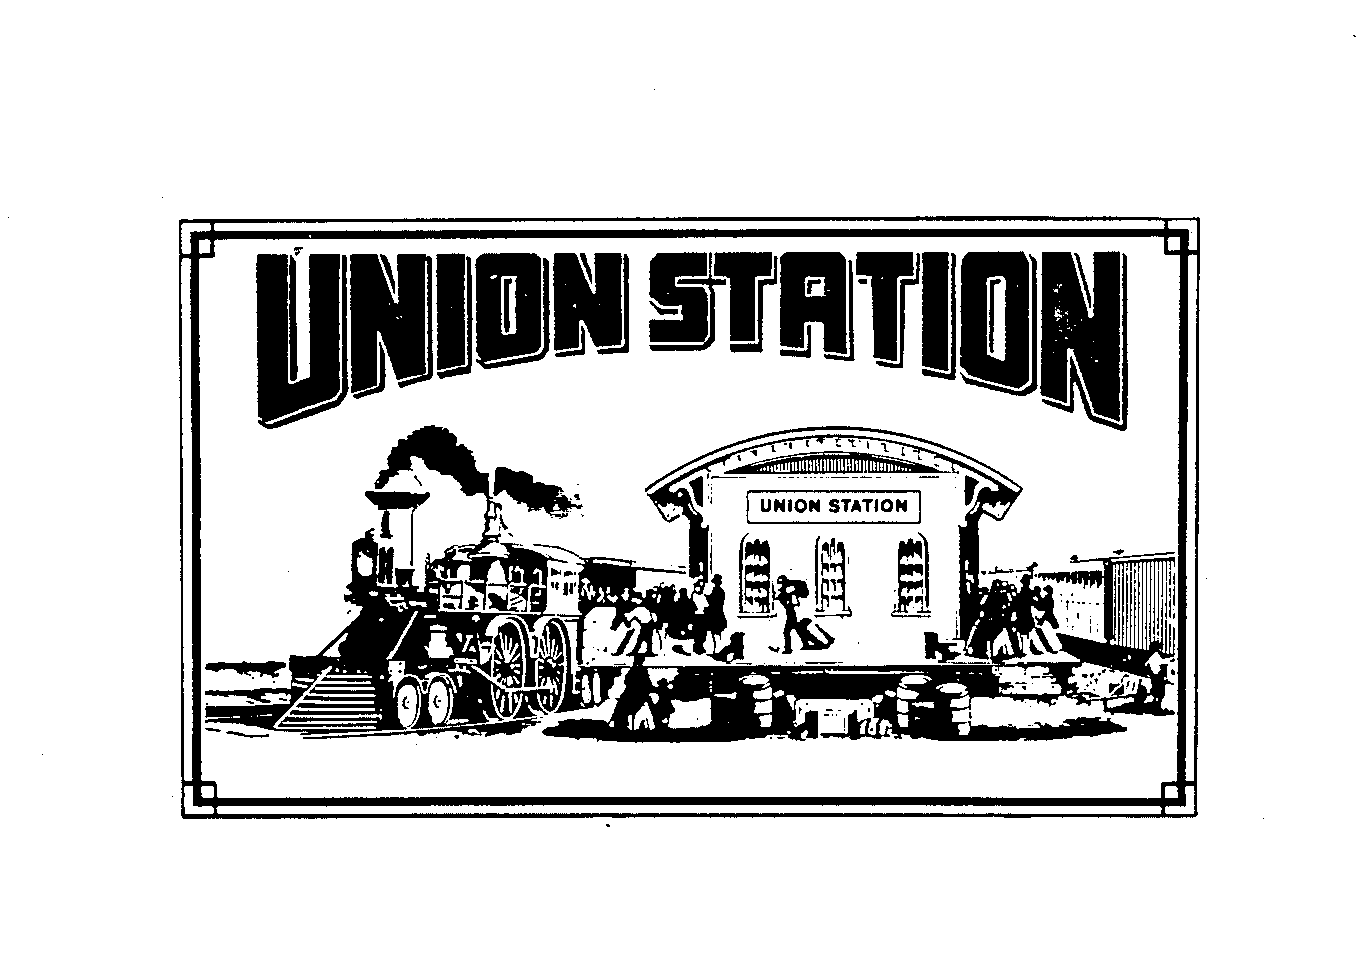  UNION STATION